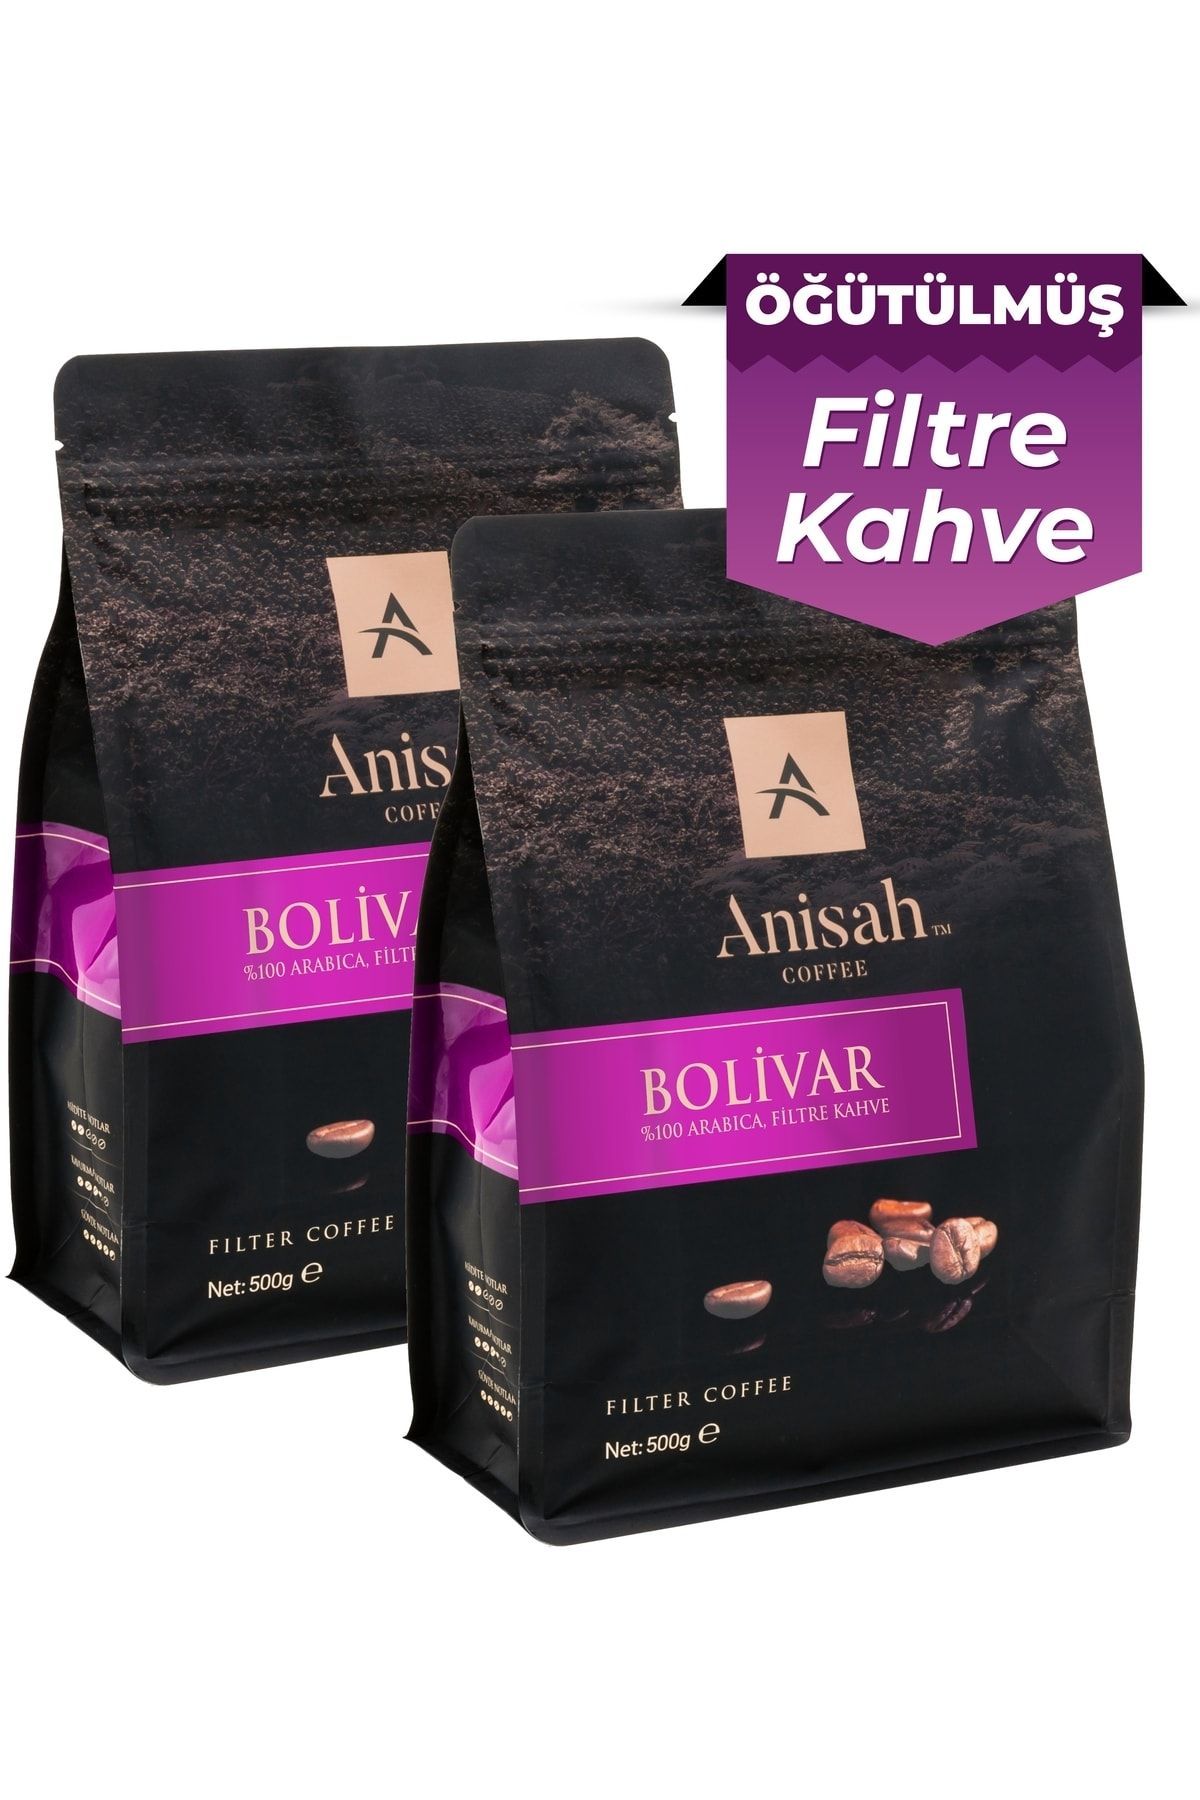 Anisah Coffee Bolivar Öğütülmüş Filtre Kahve 2 X 500 gr